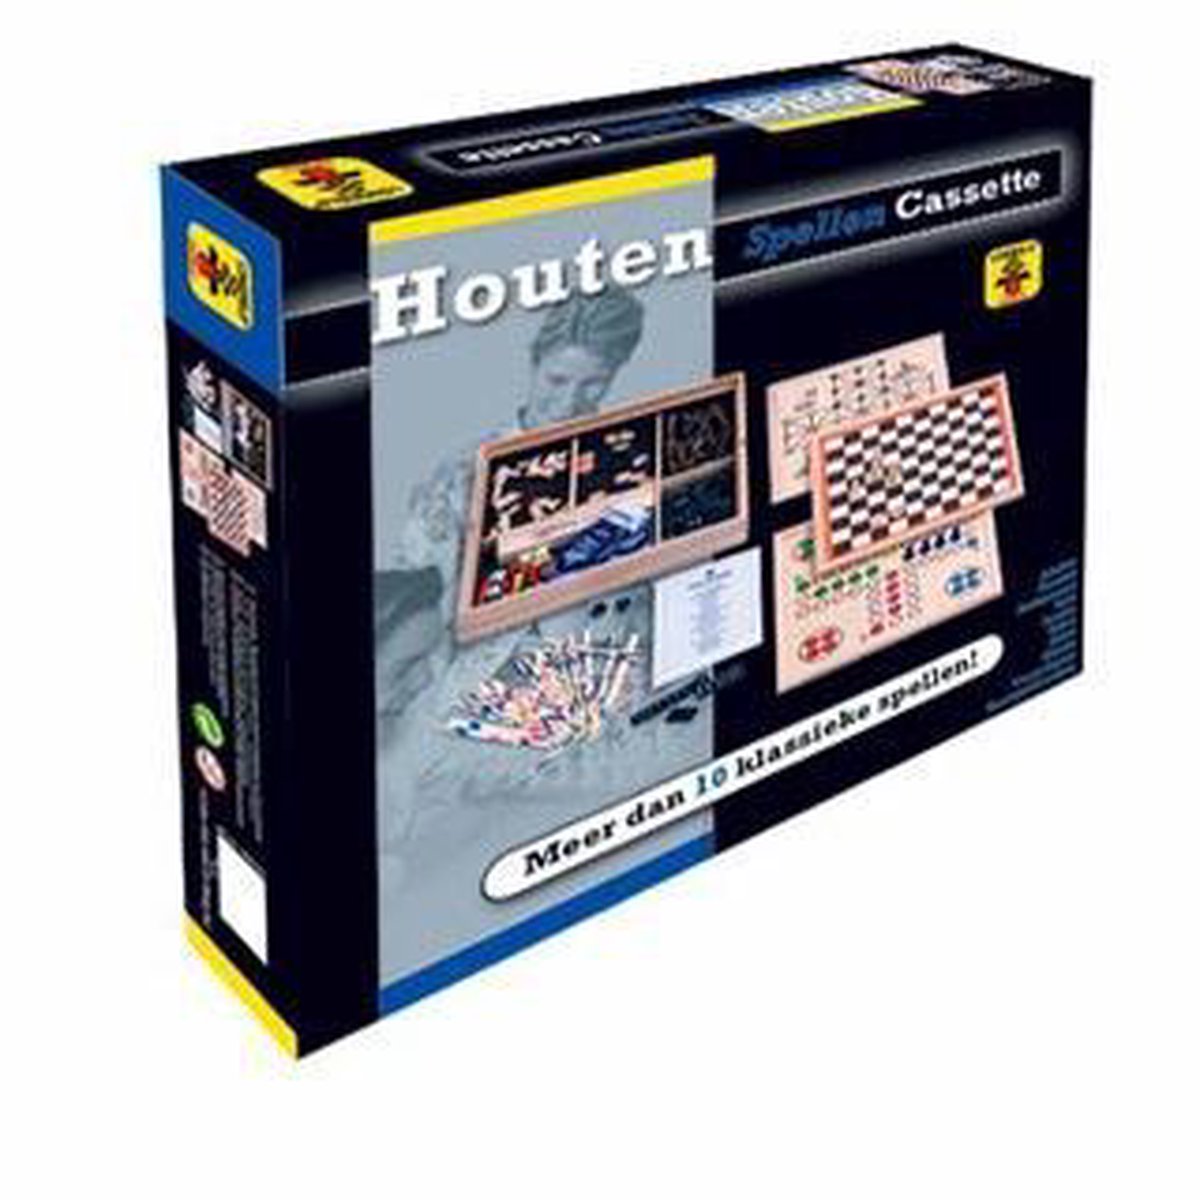 Longfield Games spelbox Cassette 36 cm